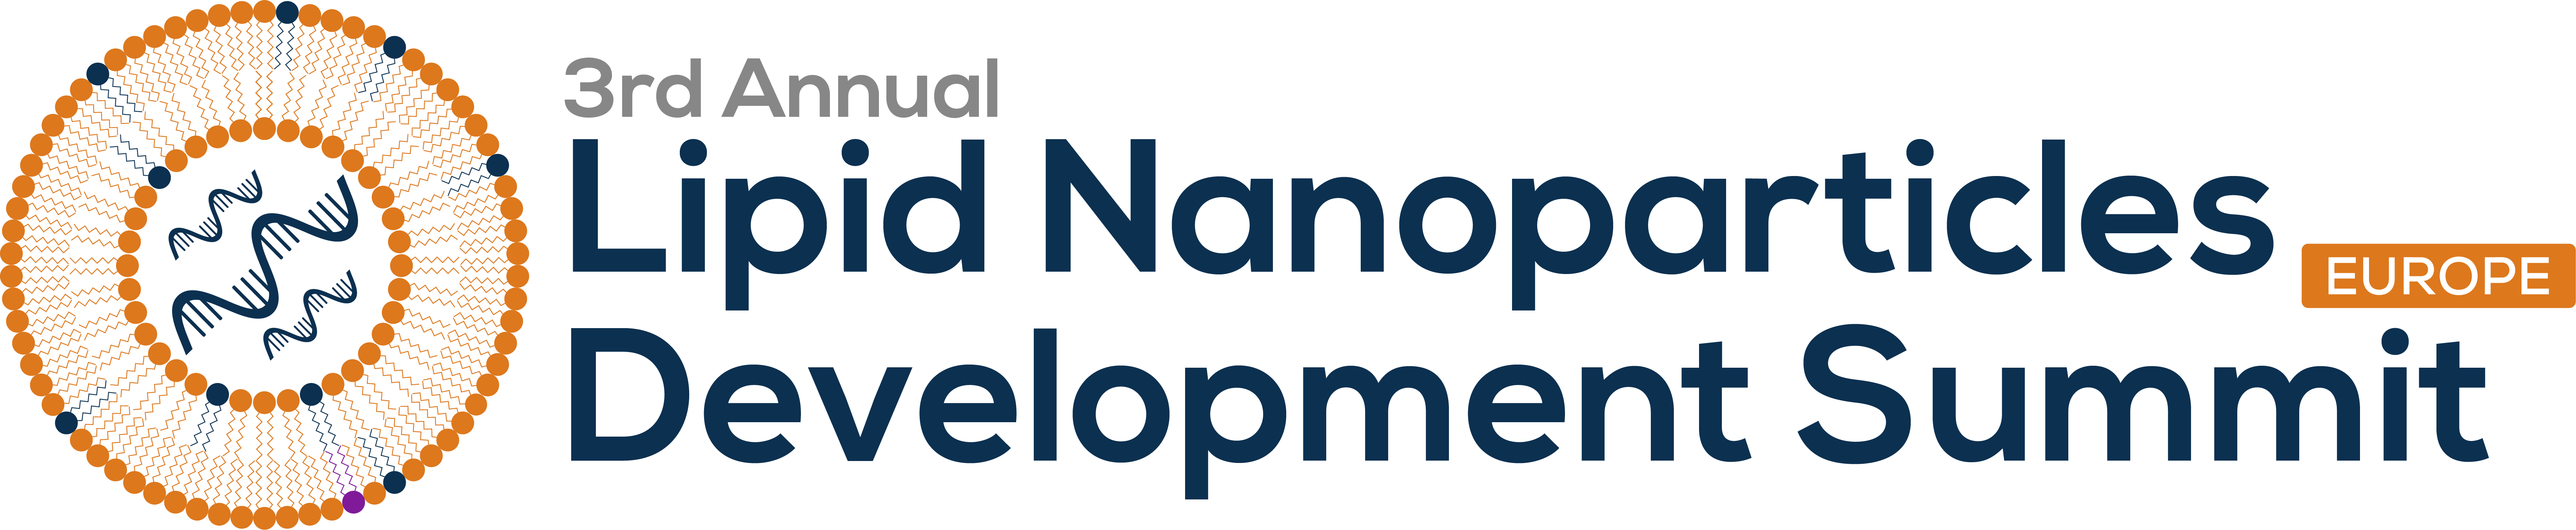 3rd Lipid Nanoparticles Development Summit Europe logo (2)